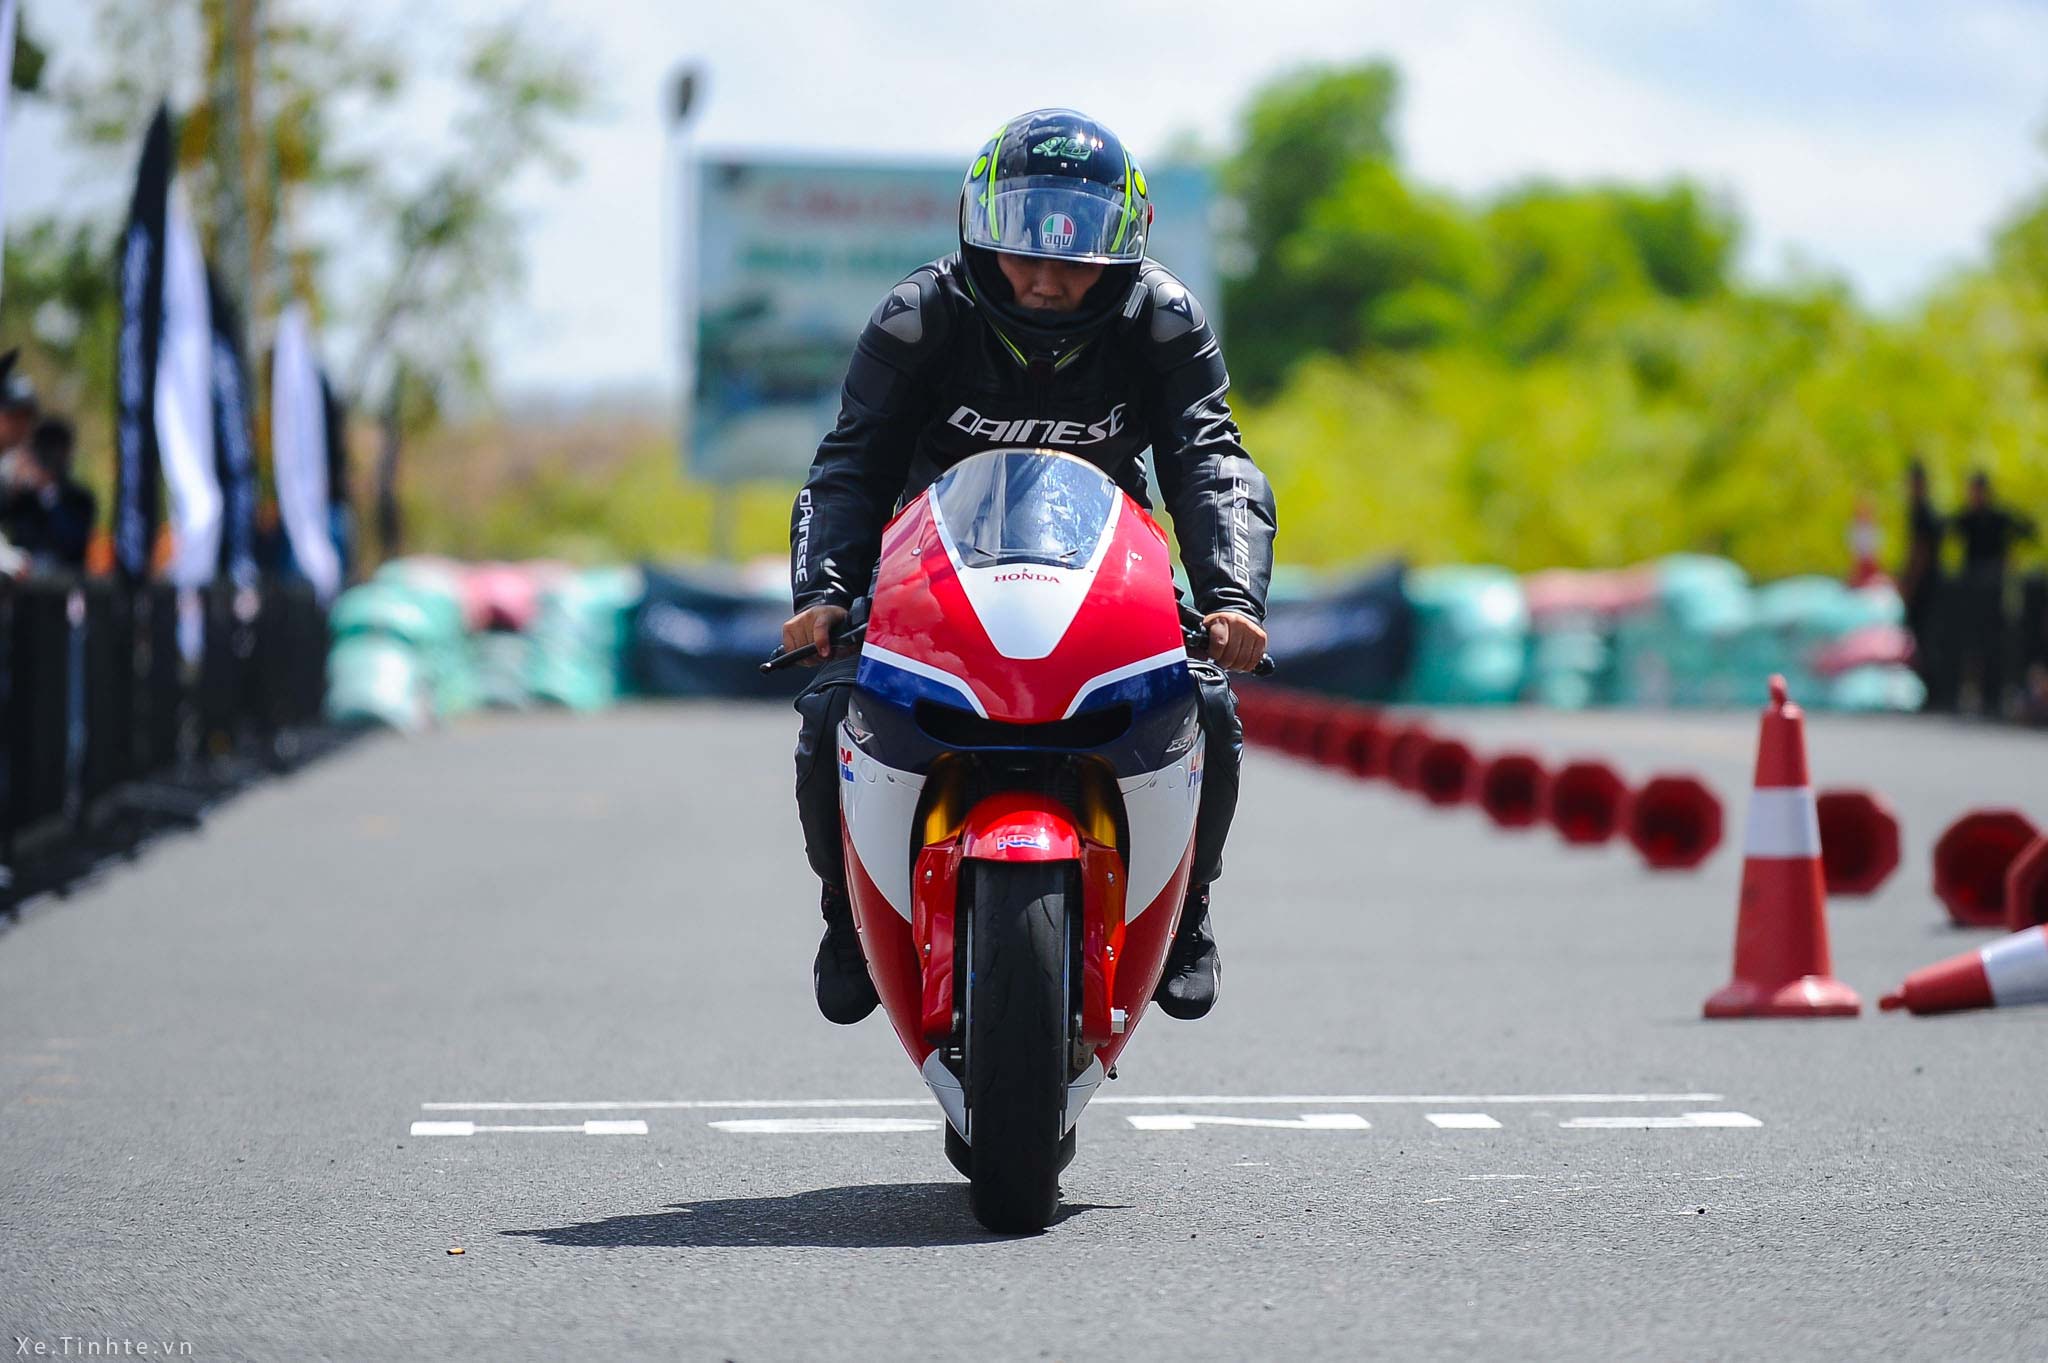 Honda_biker_day_2019_Saigon_Phanthiet (30).jpg